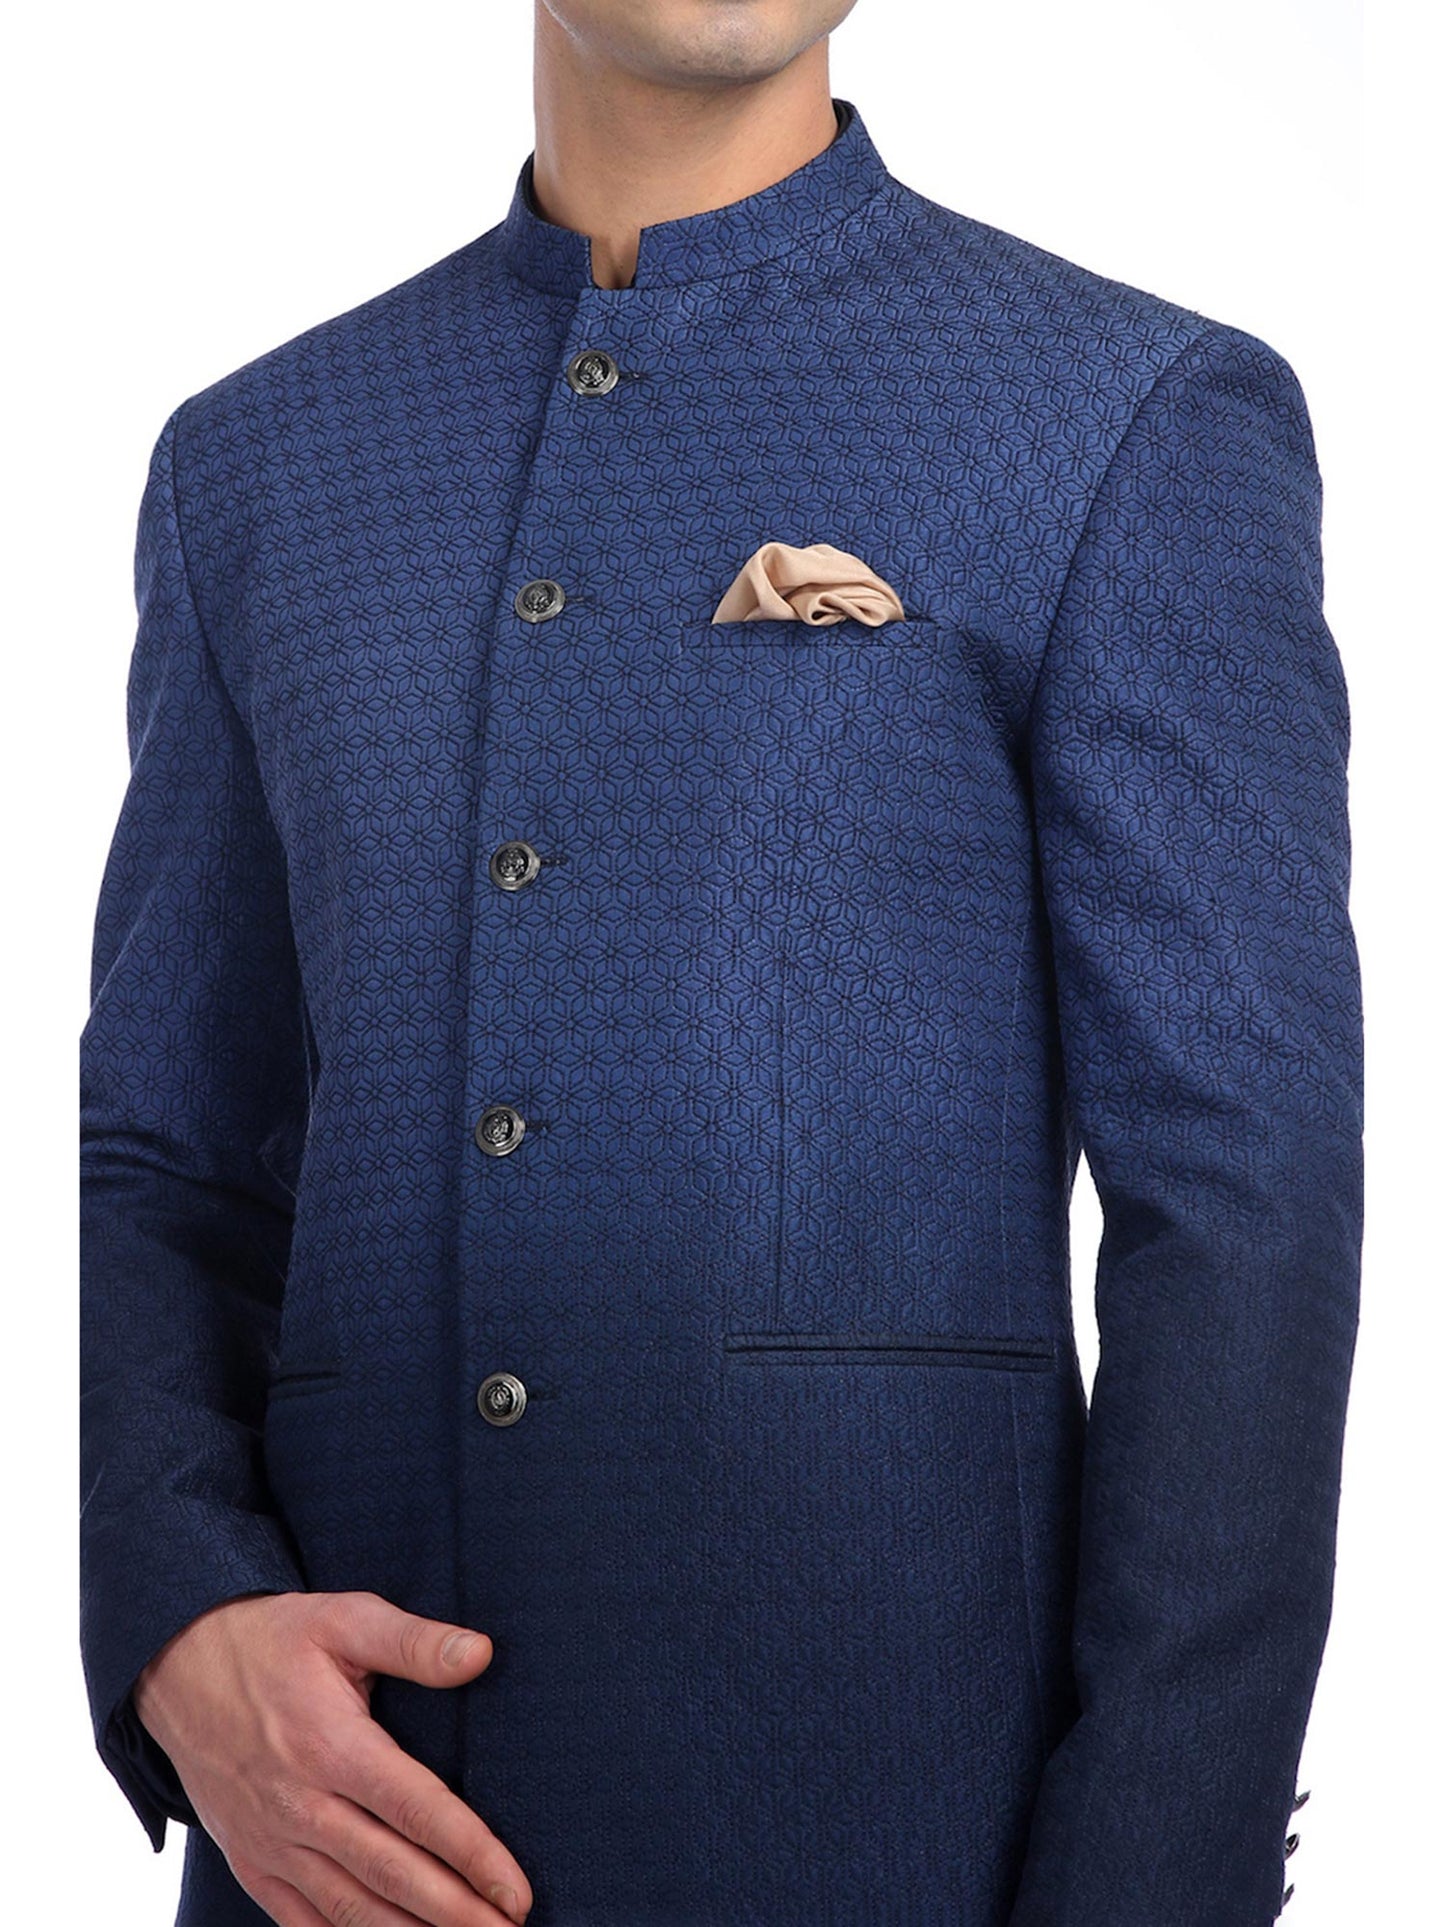 Ombre Blue Bandhgala Jacket